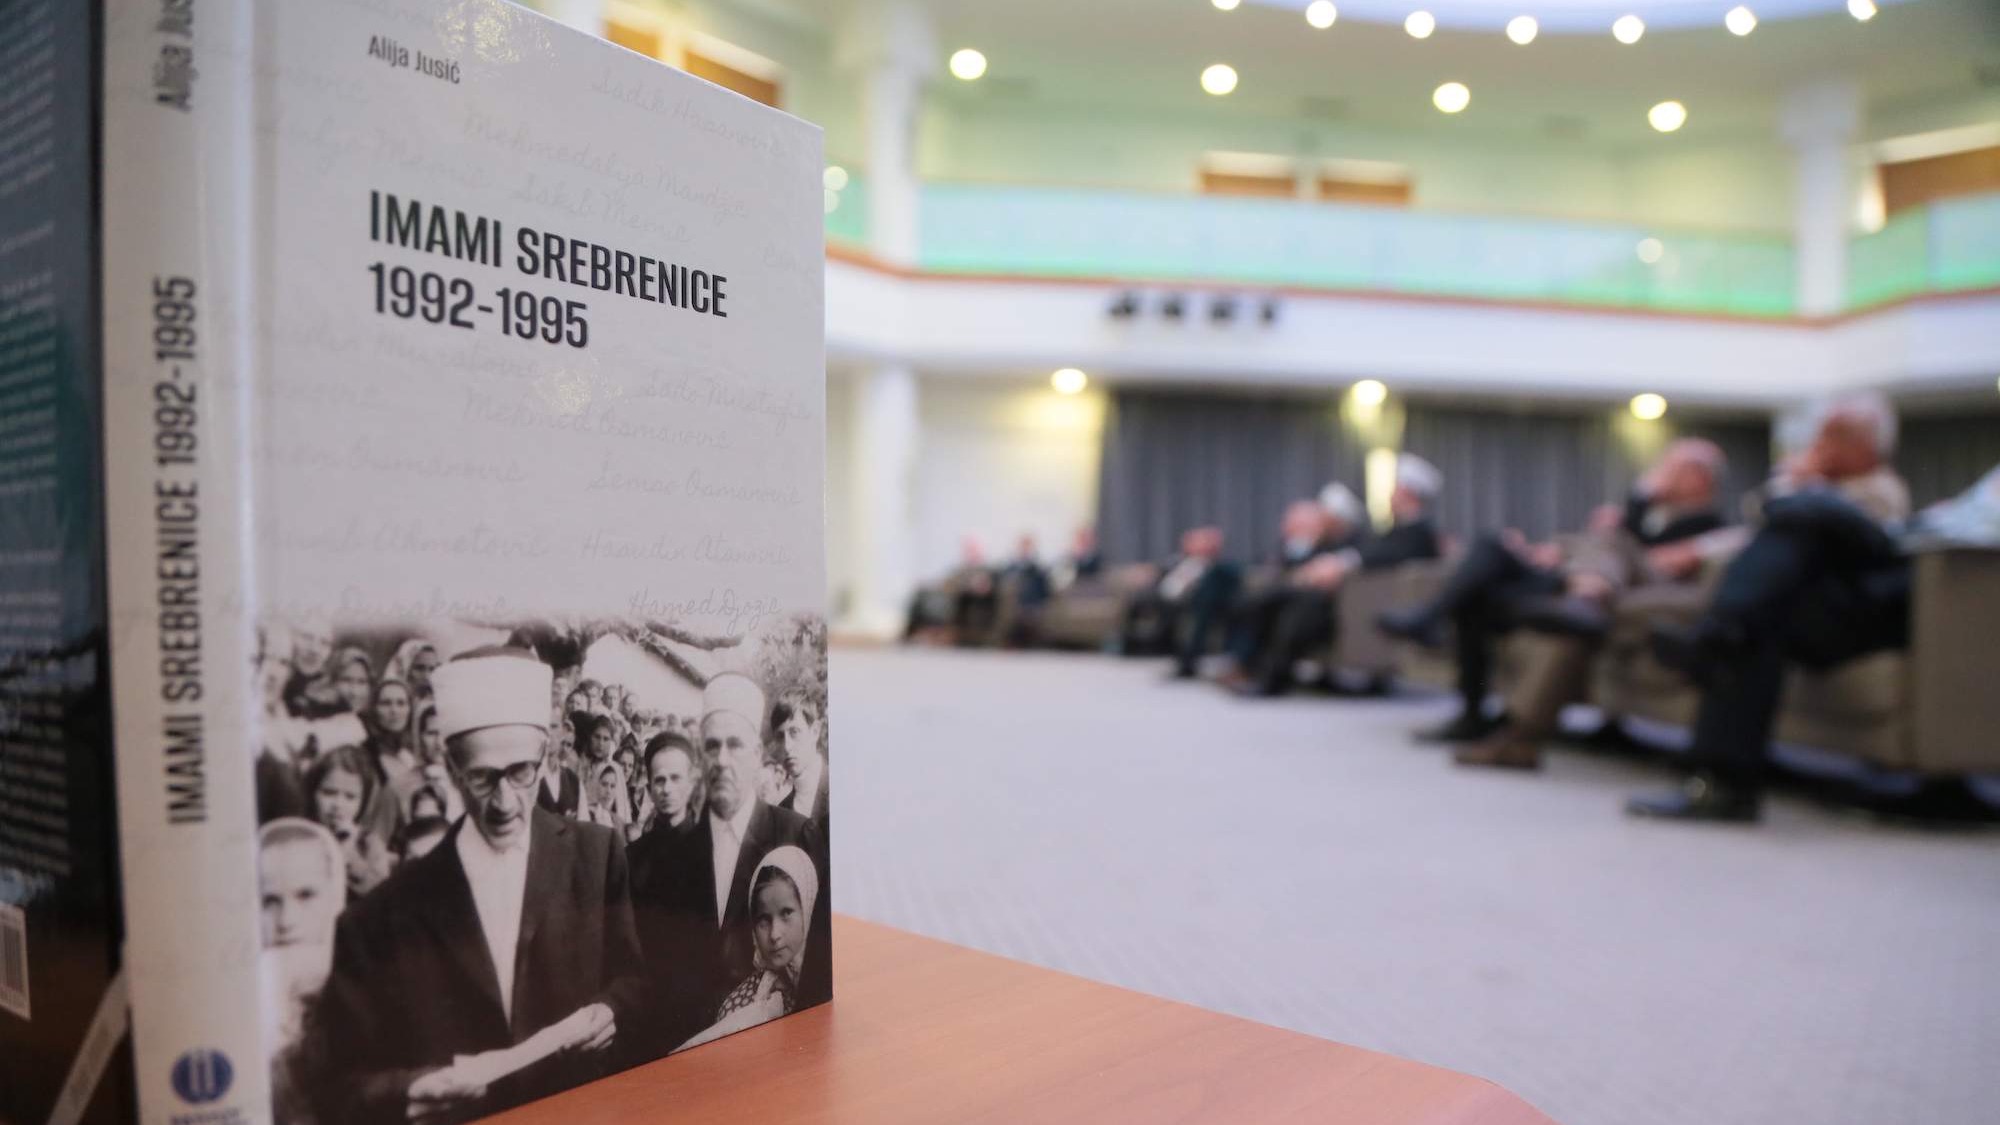 Godišnjica Udruženja ilmijje: Predstavljena knjiga "Imami Srebrenice 1992 - 1995: Memorizacija kao zavjet i opomena" (VIDEO)